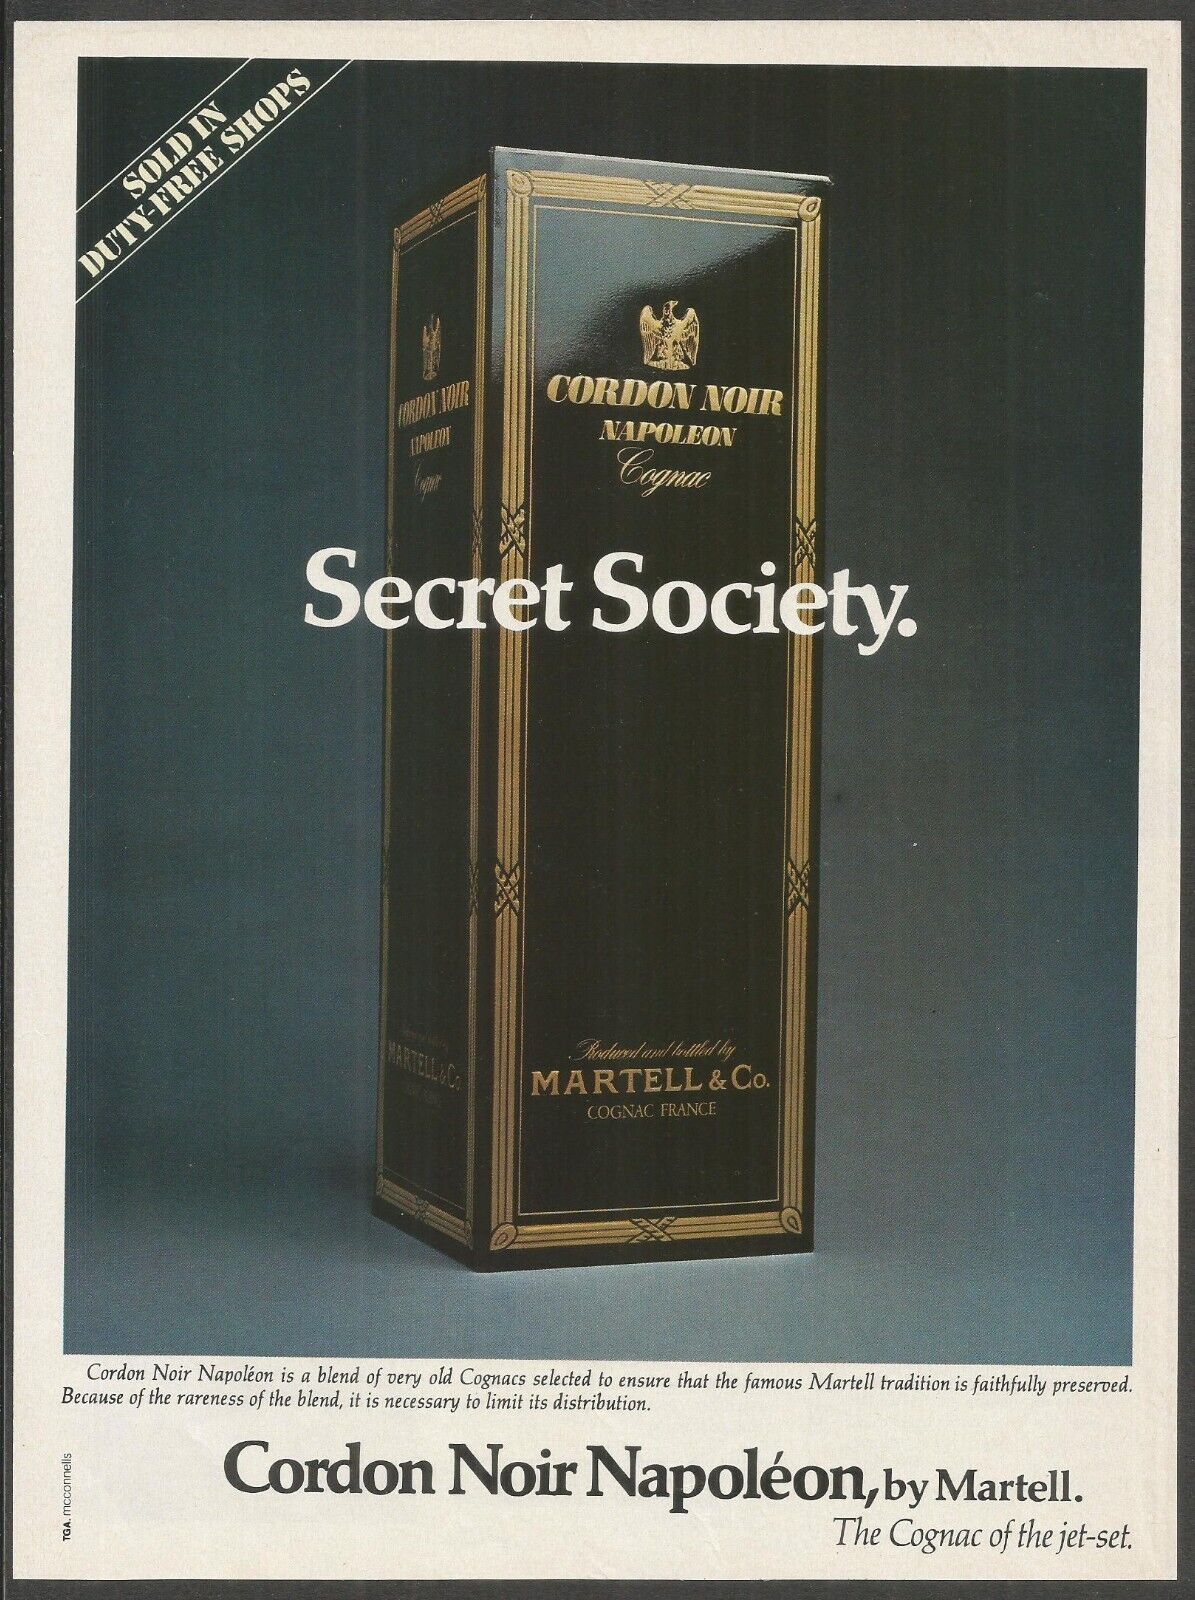 Cognac Cordon Noir Napoleon - Secret Society - 1978 Vintage Print Ad